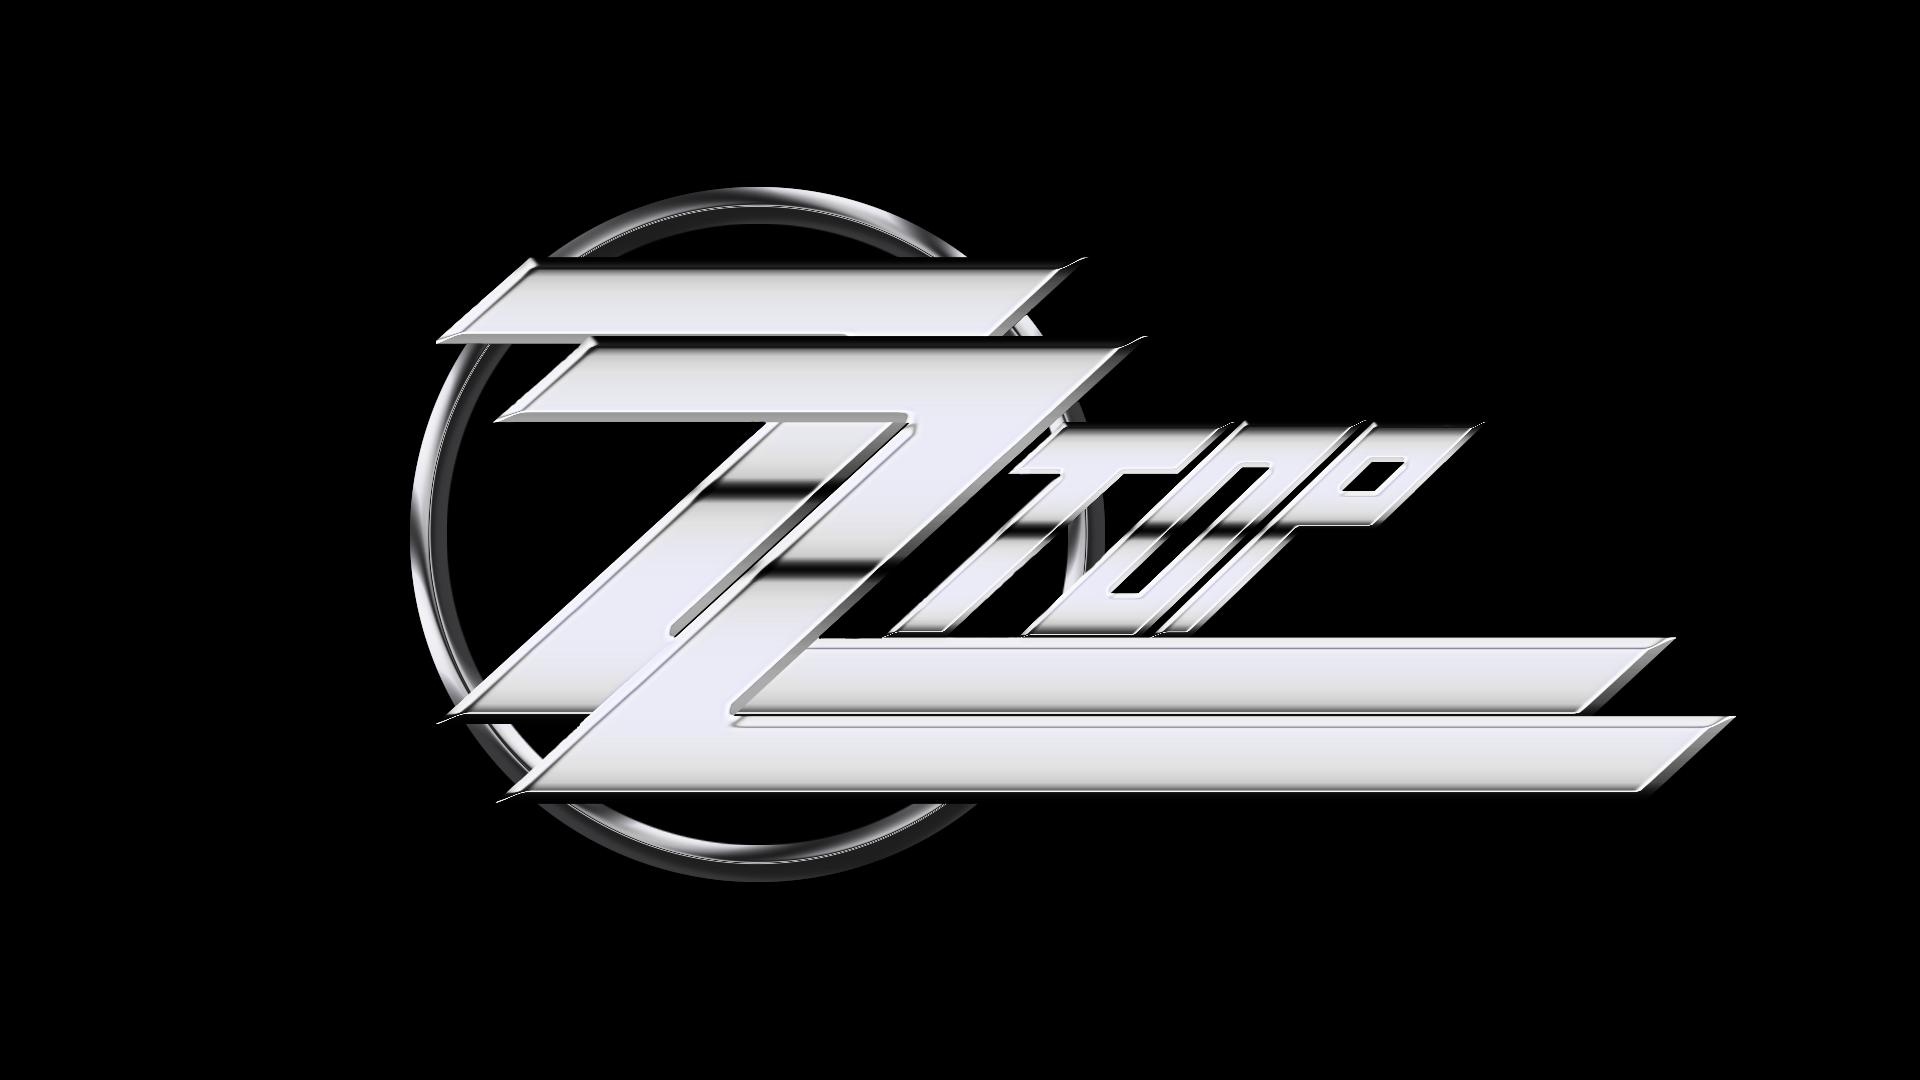 Zz Top Hard Rock Logo Wallpaper